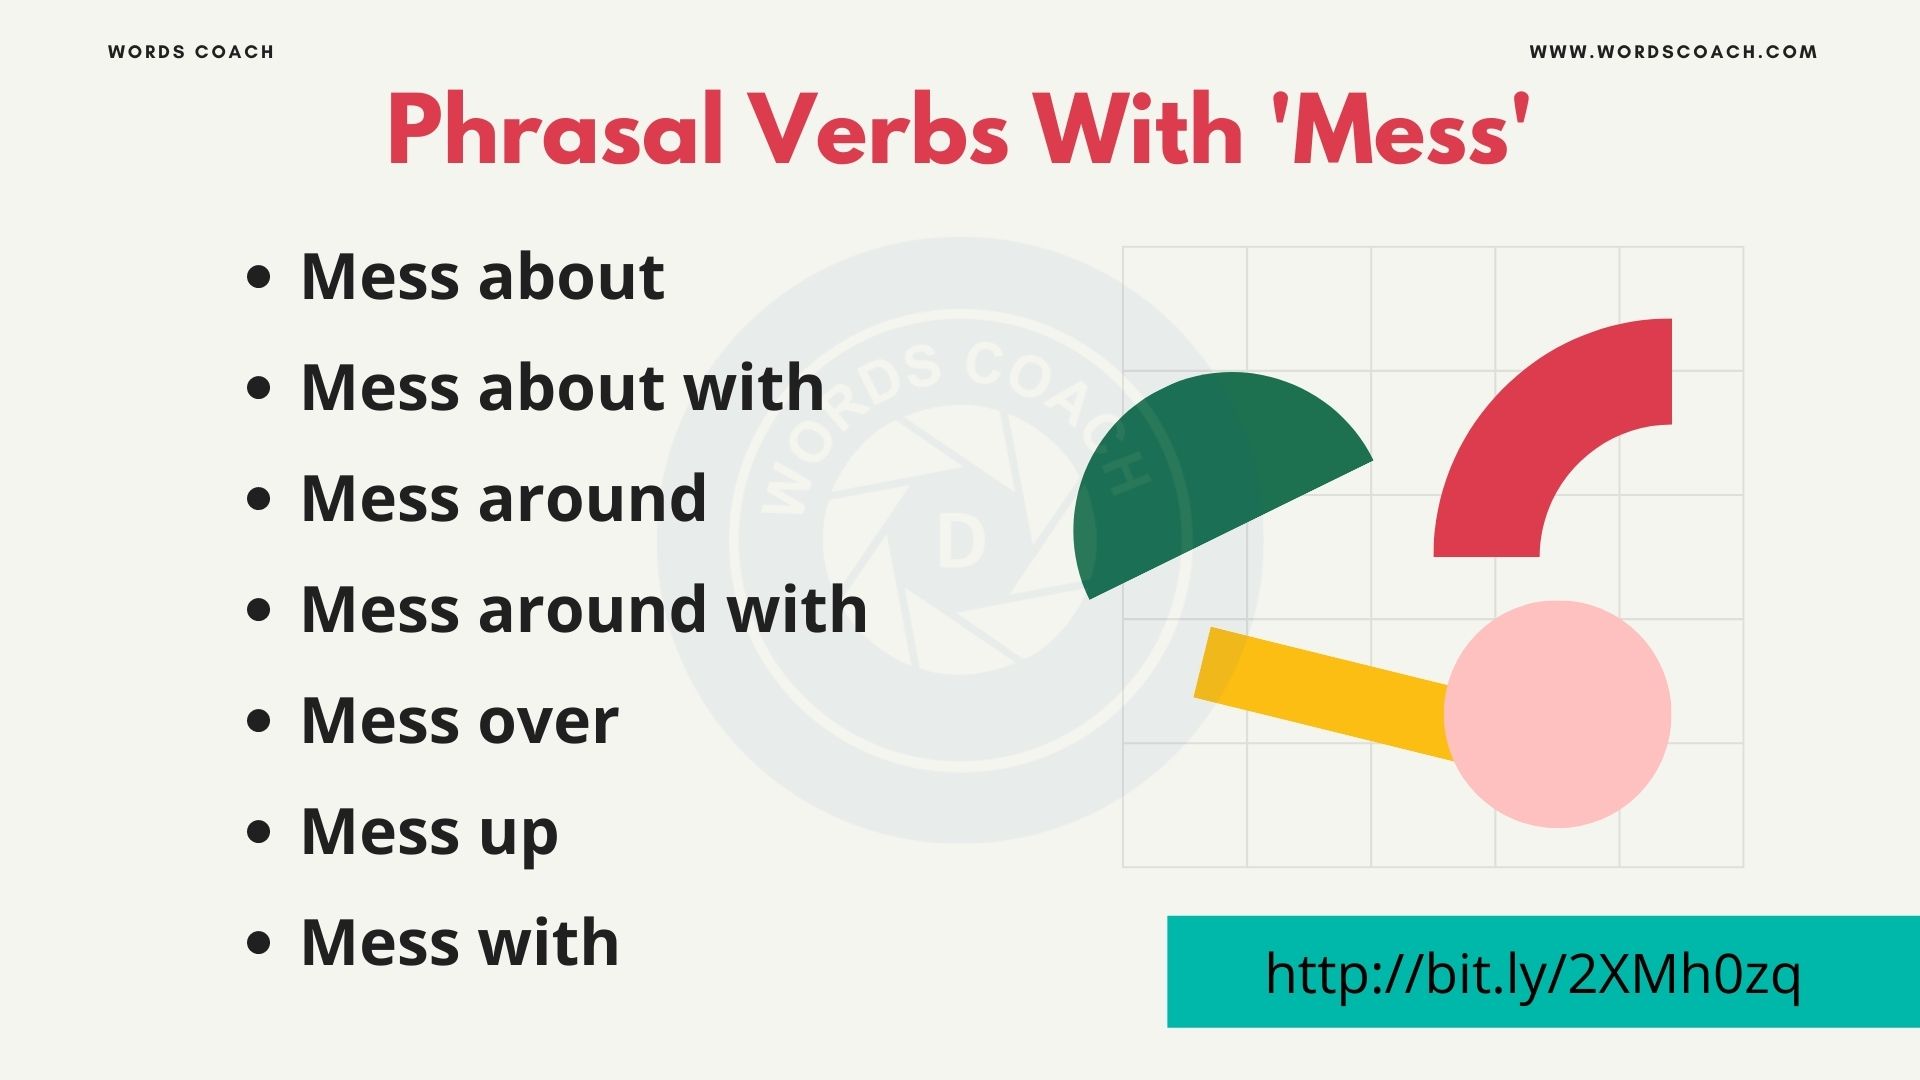 Phrasal Verbs With 'Mess' - wordscoach.com